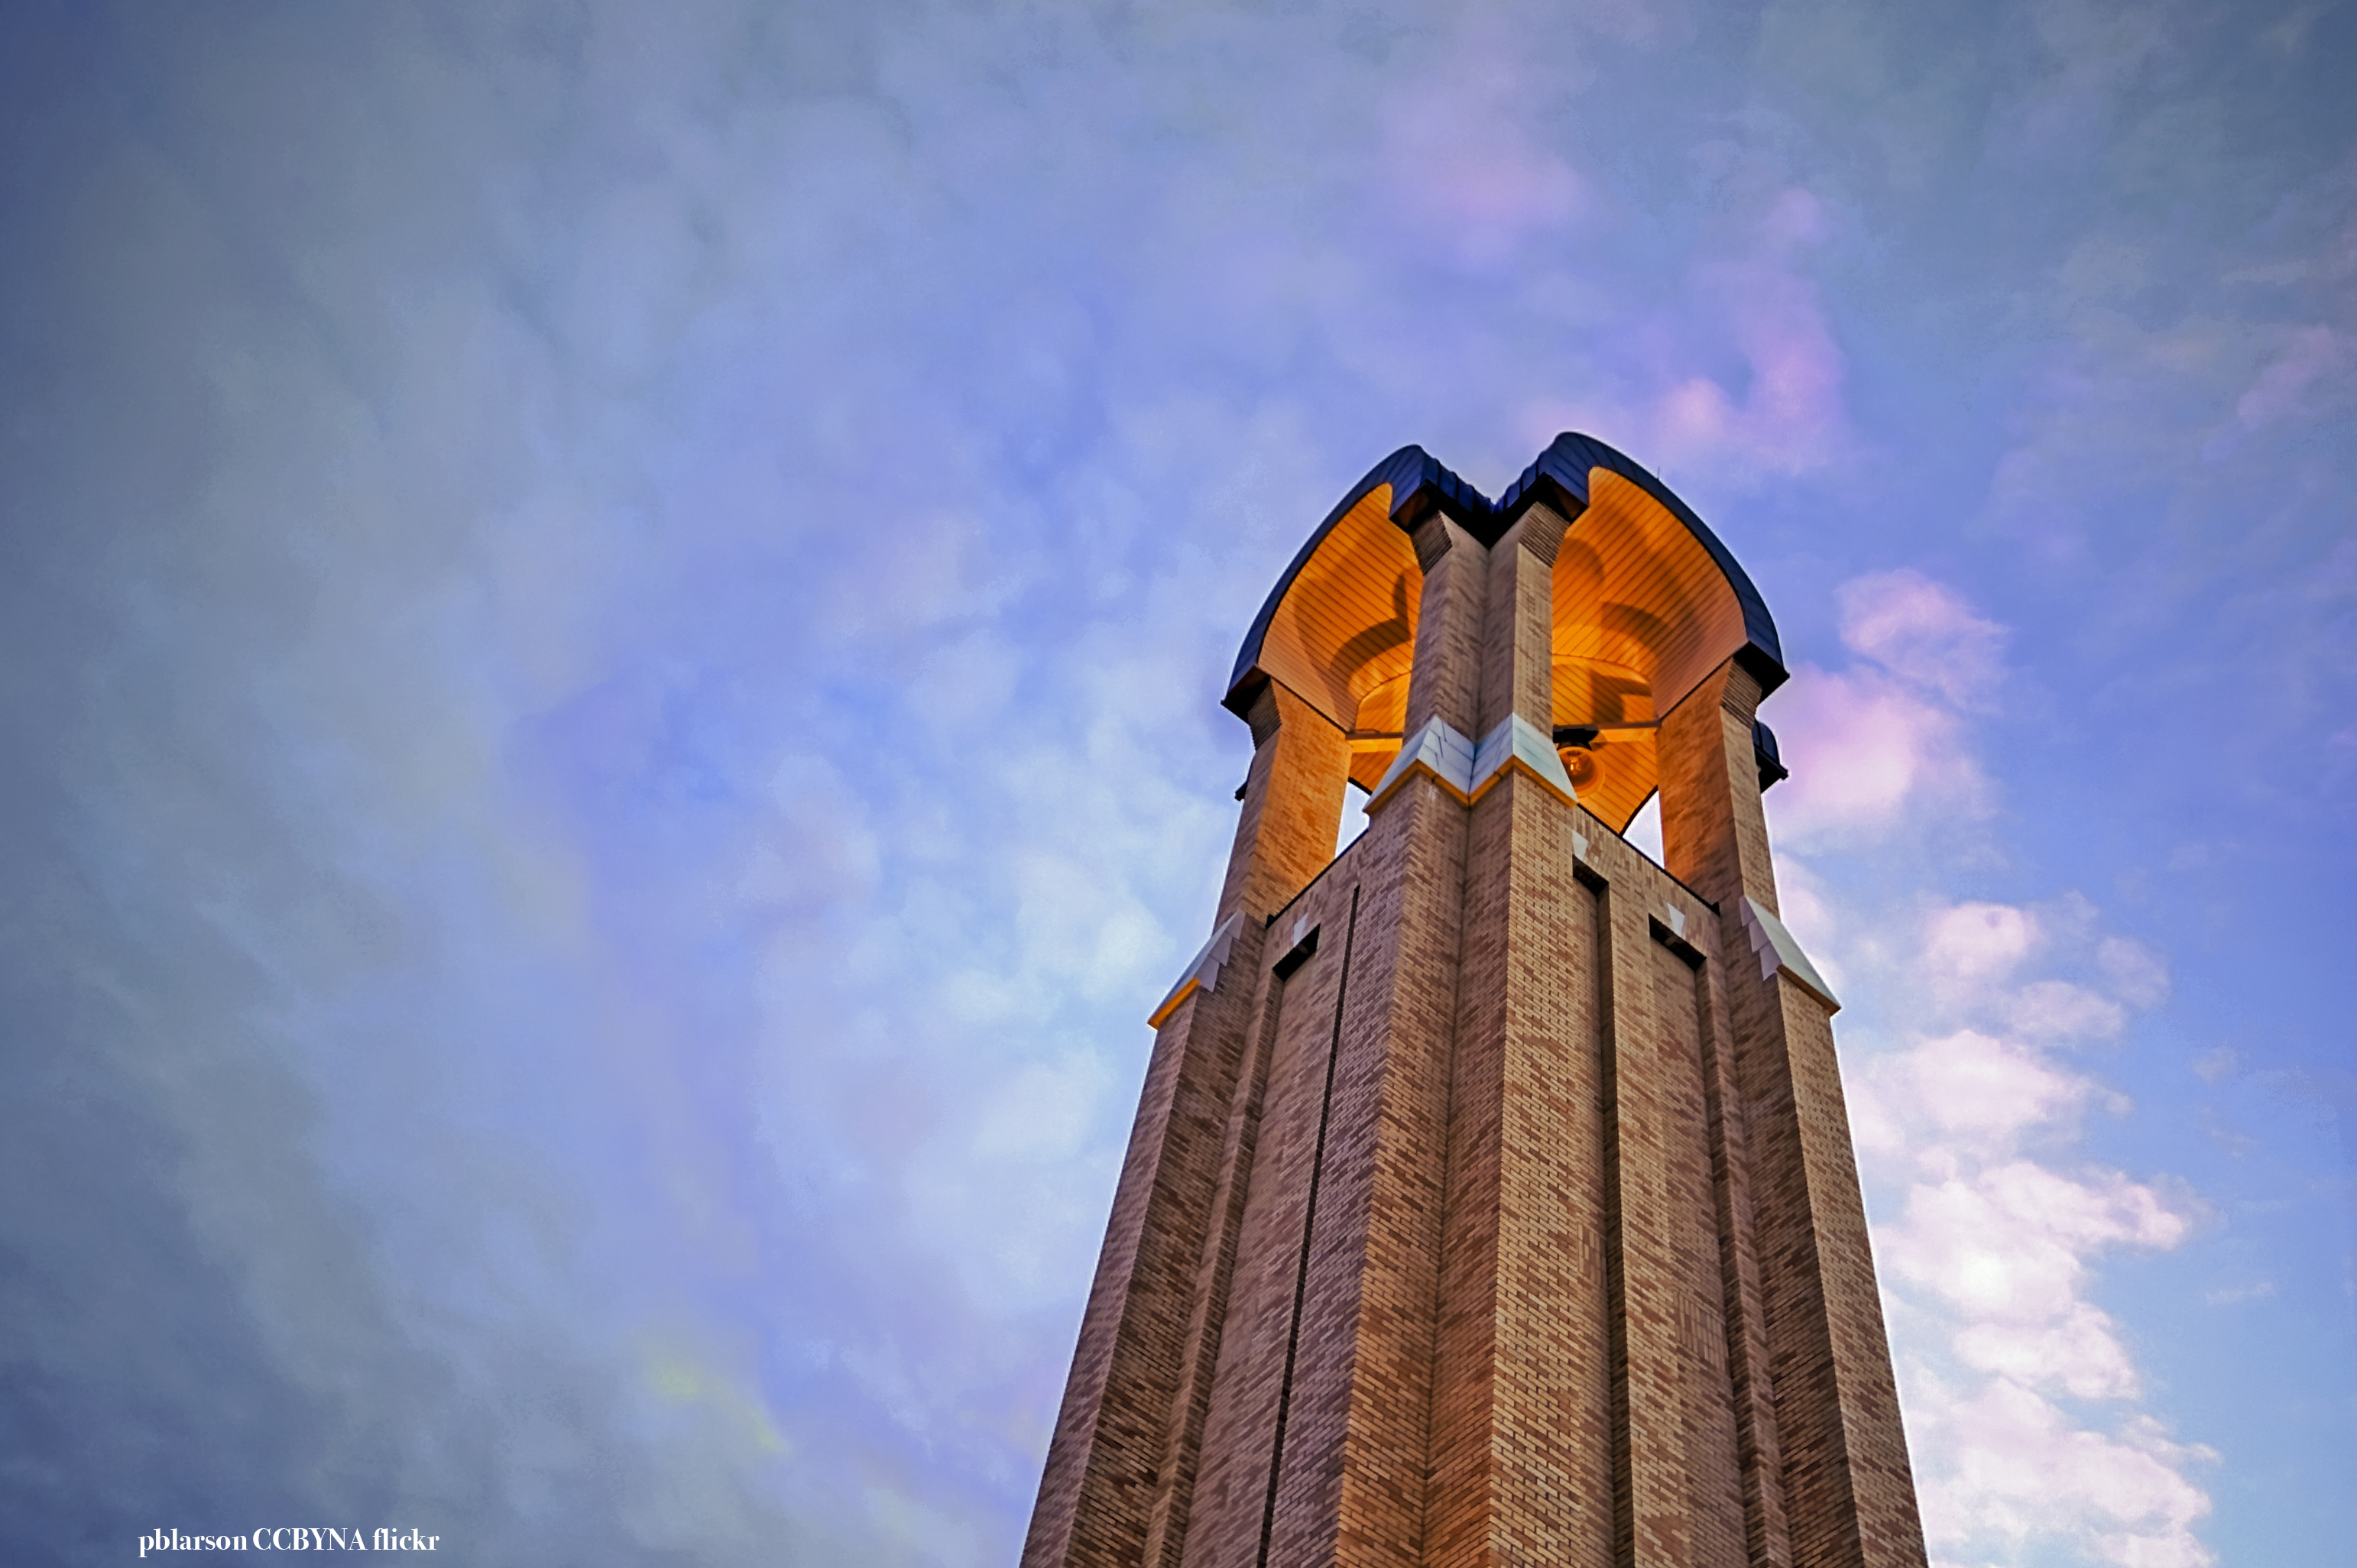 Concordia's tower